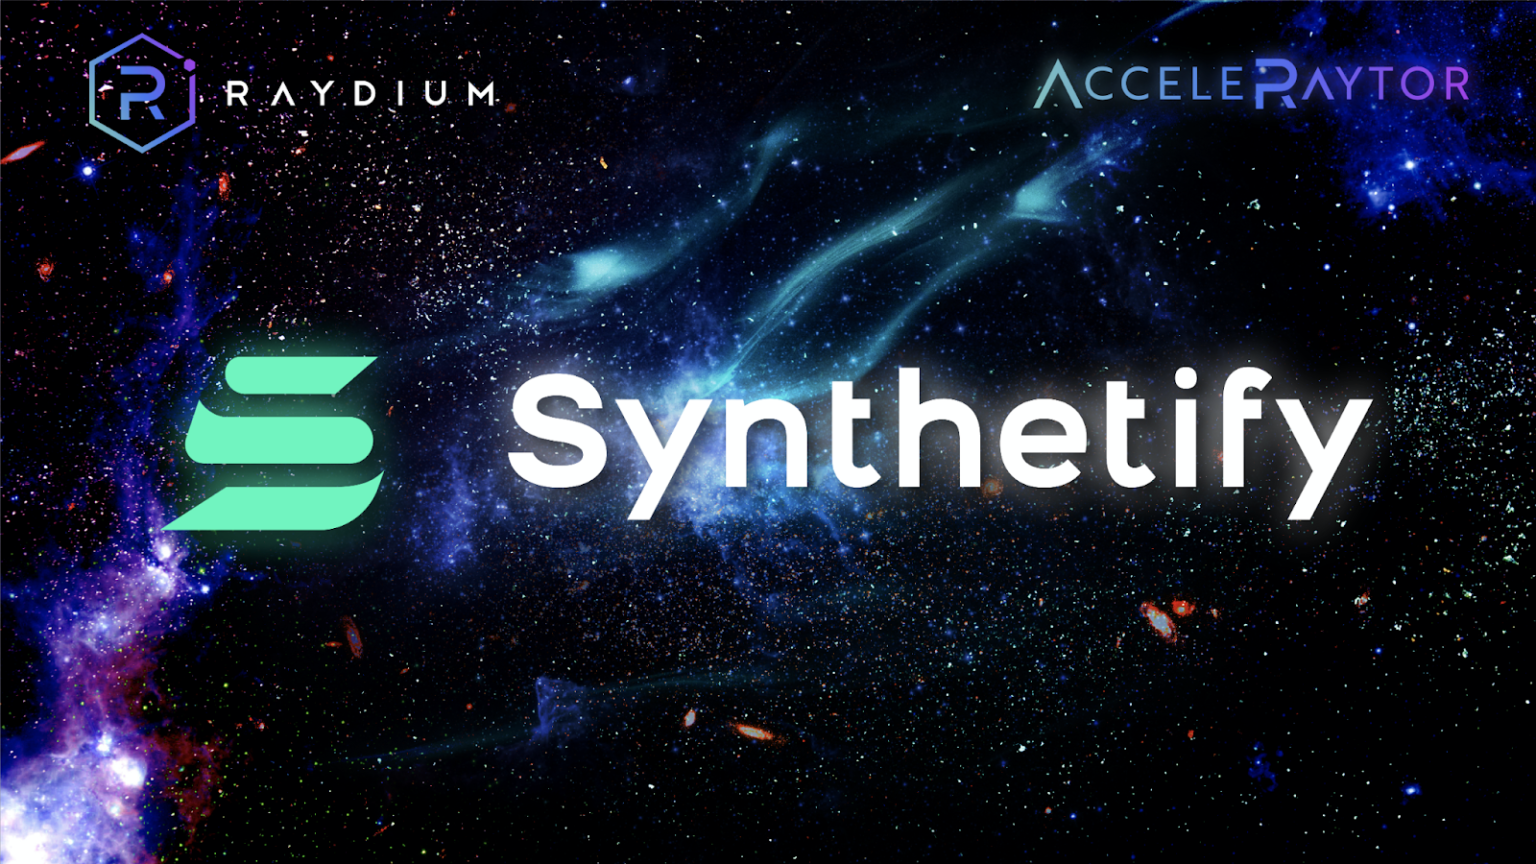 Raydium Announces Synthetify Launching on AcceleRaytor ...